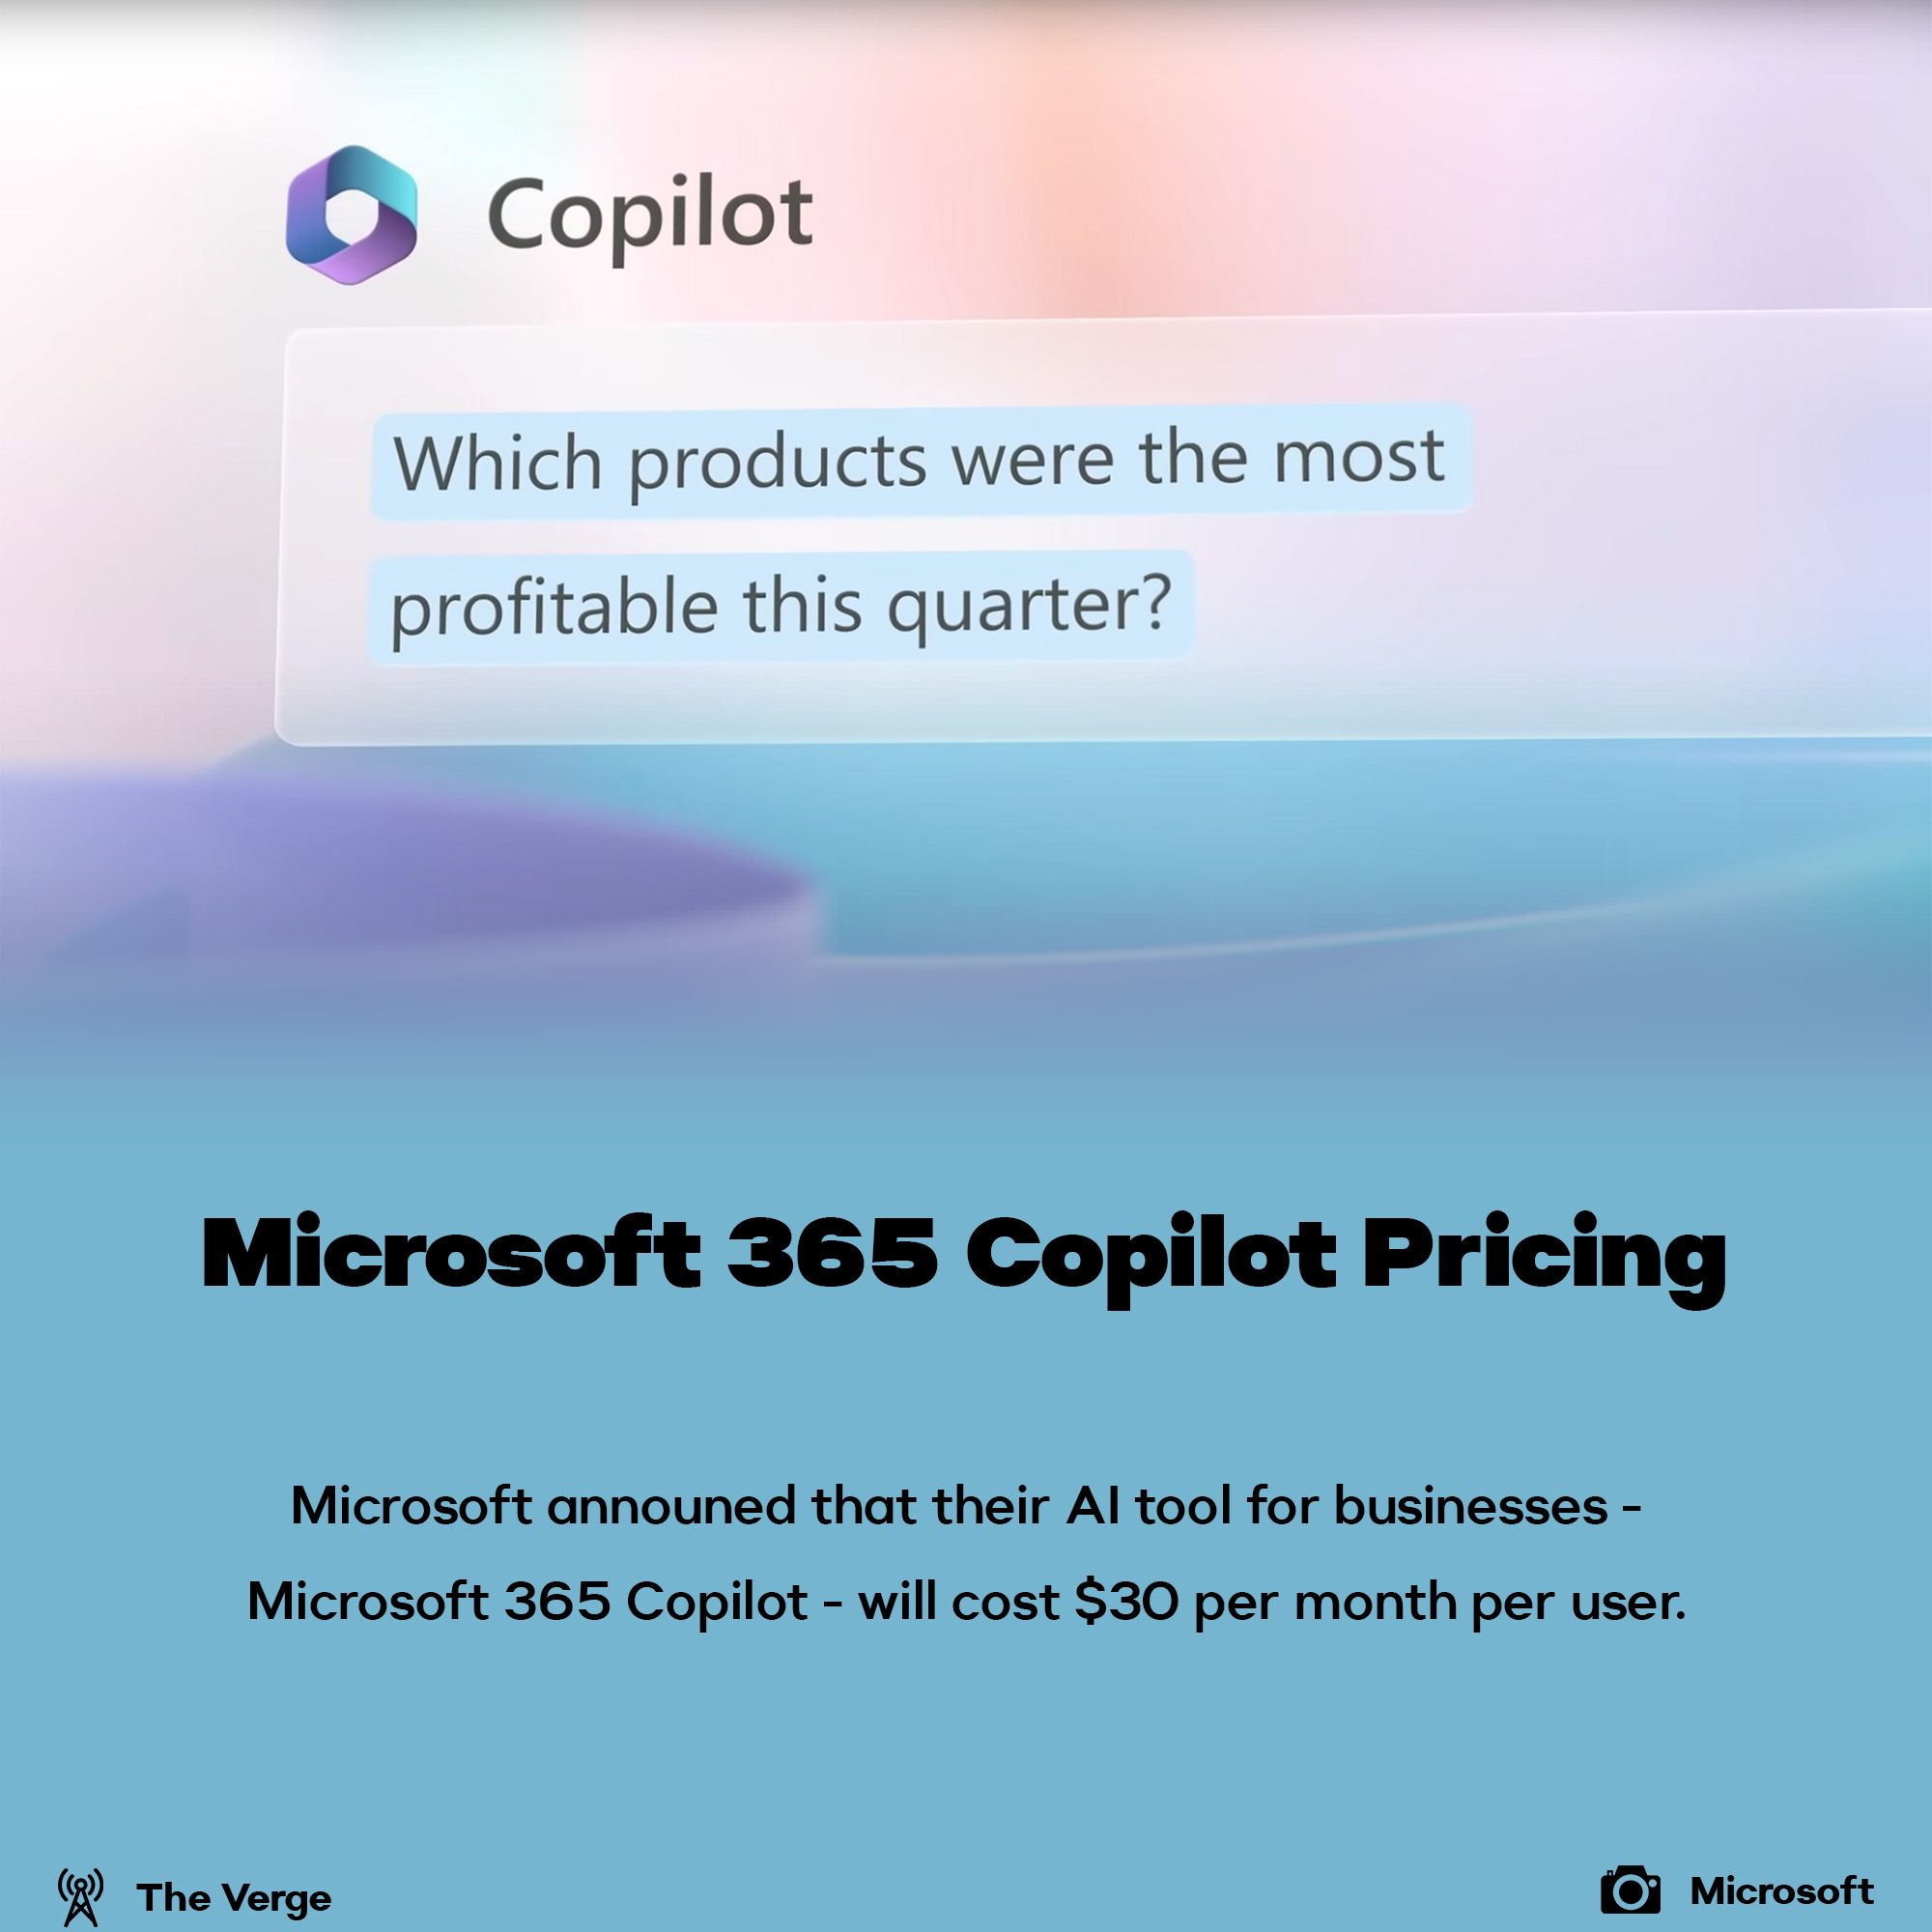 Microsoft 365 Copilot pricing